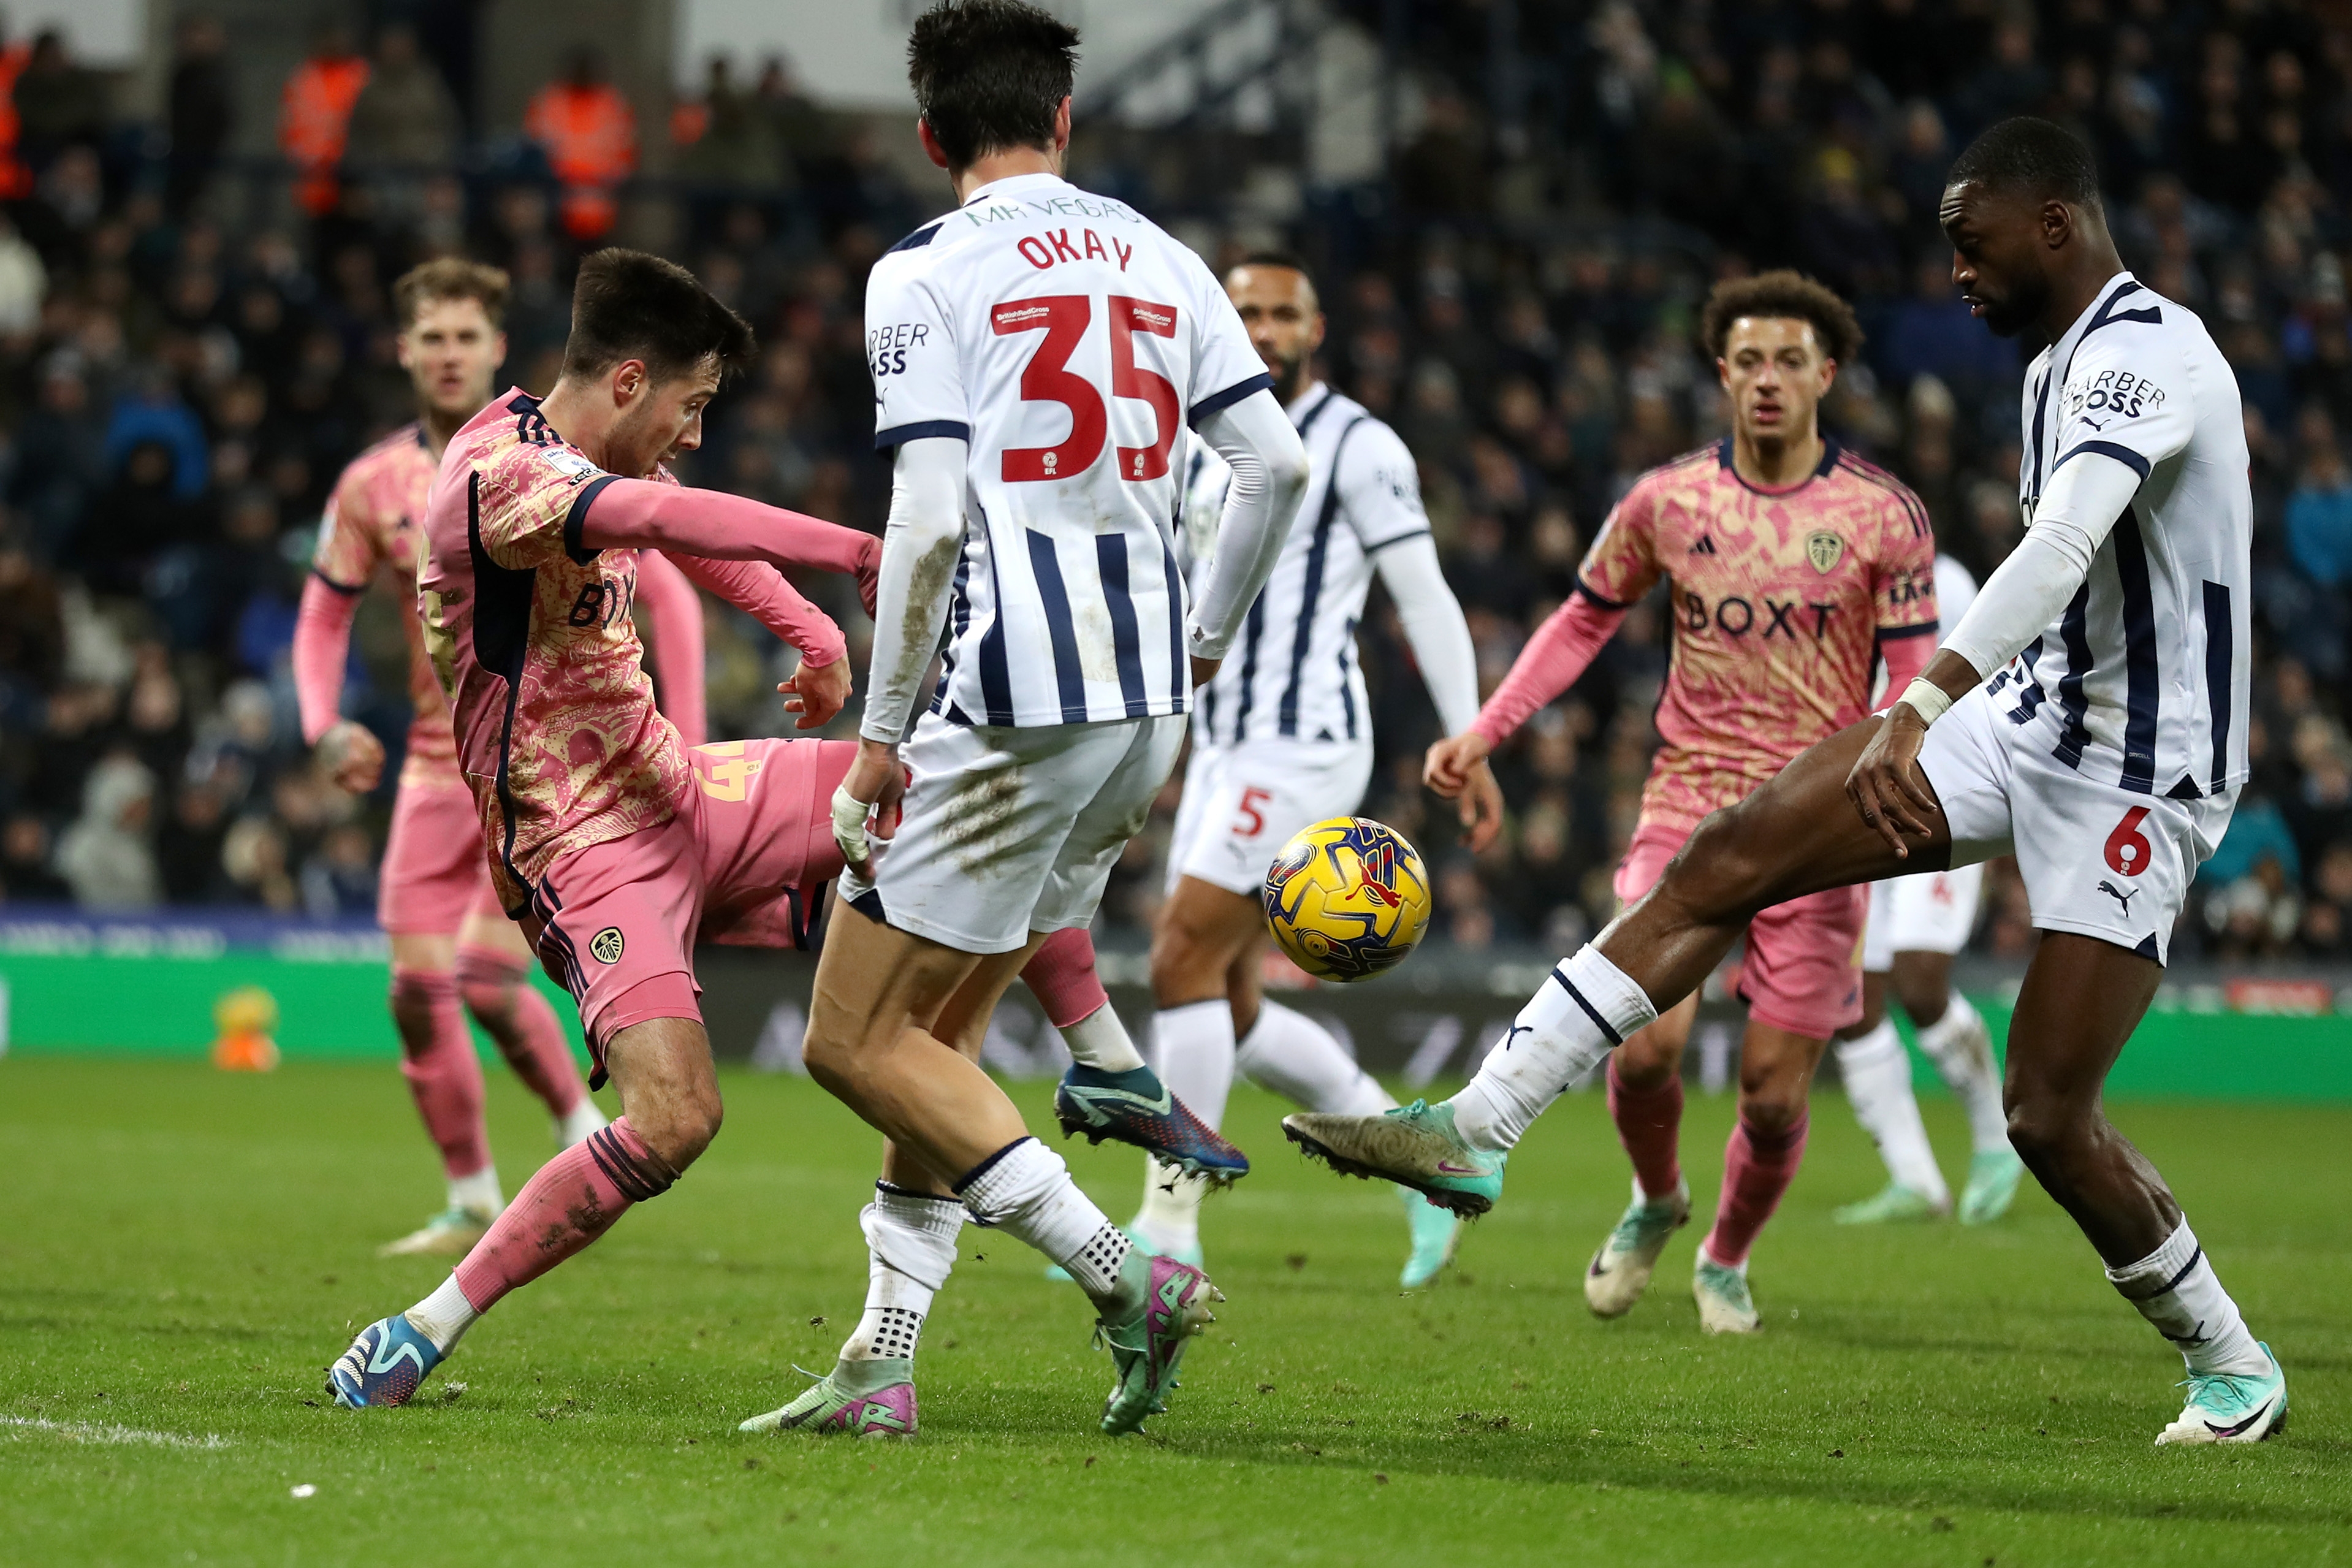 A goal-mouth scramble against Leeds